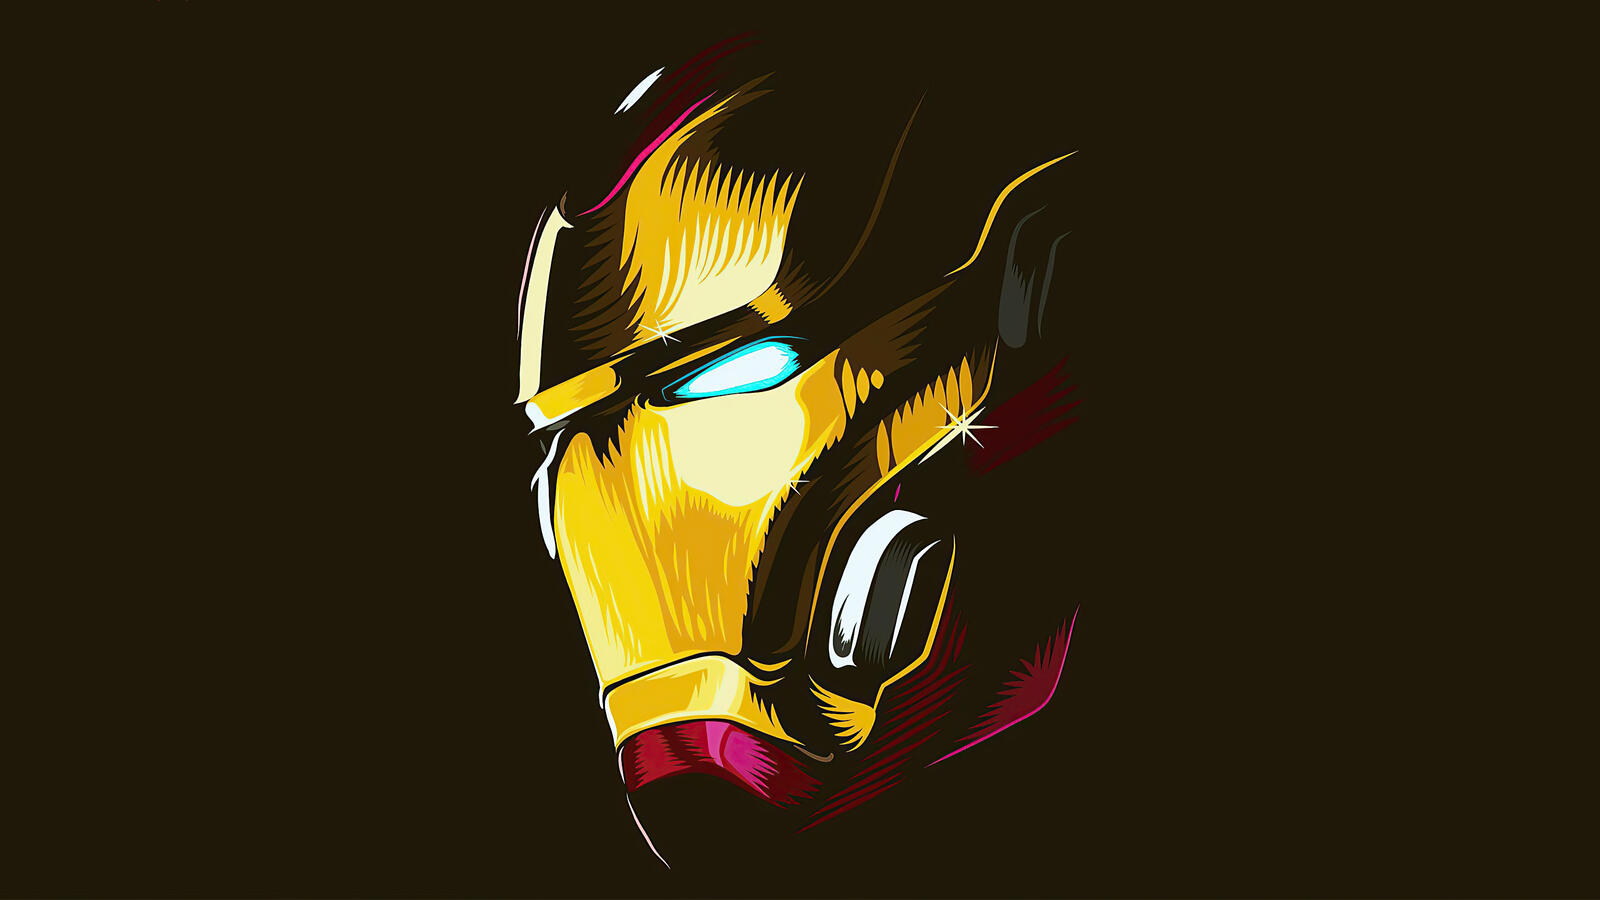 Wallpapers minimalism Iron Man helmet on the desktop